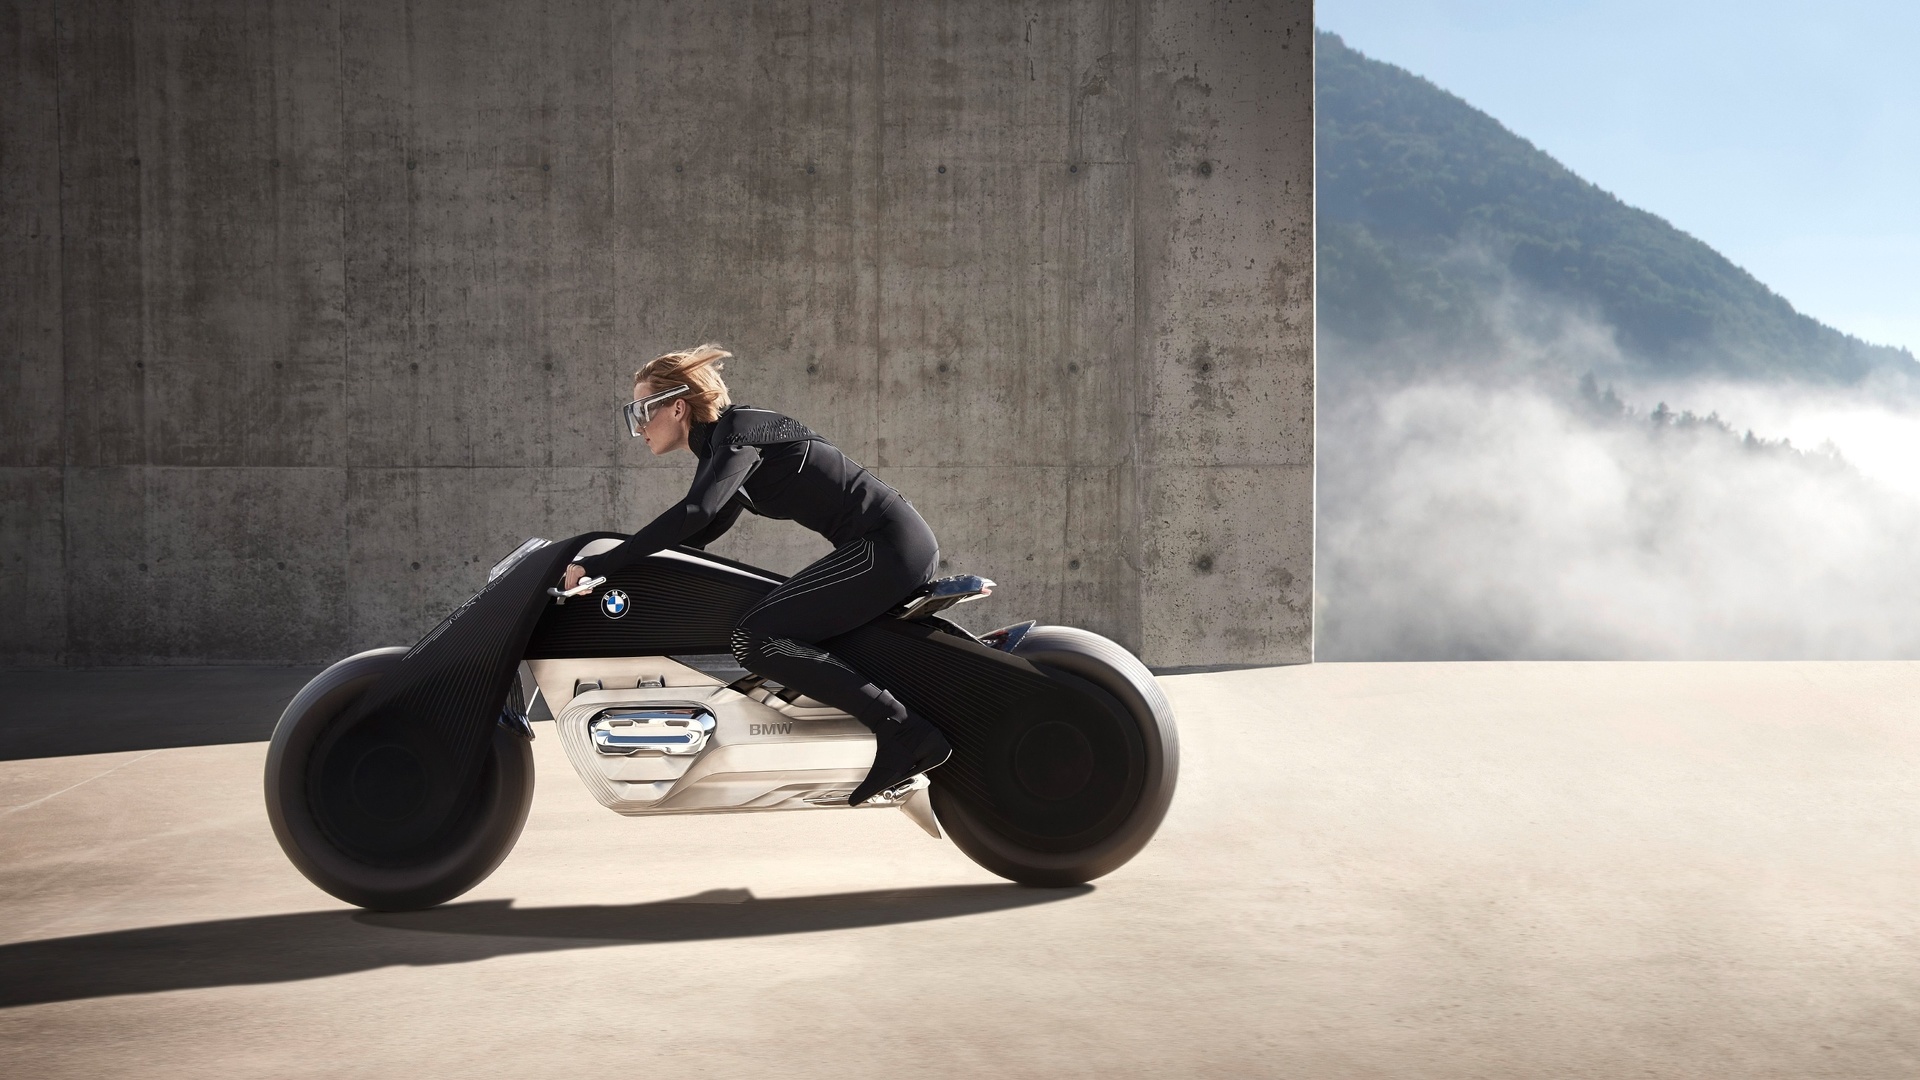 BMW moto concept futuriste - fond d'écran.jpg